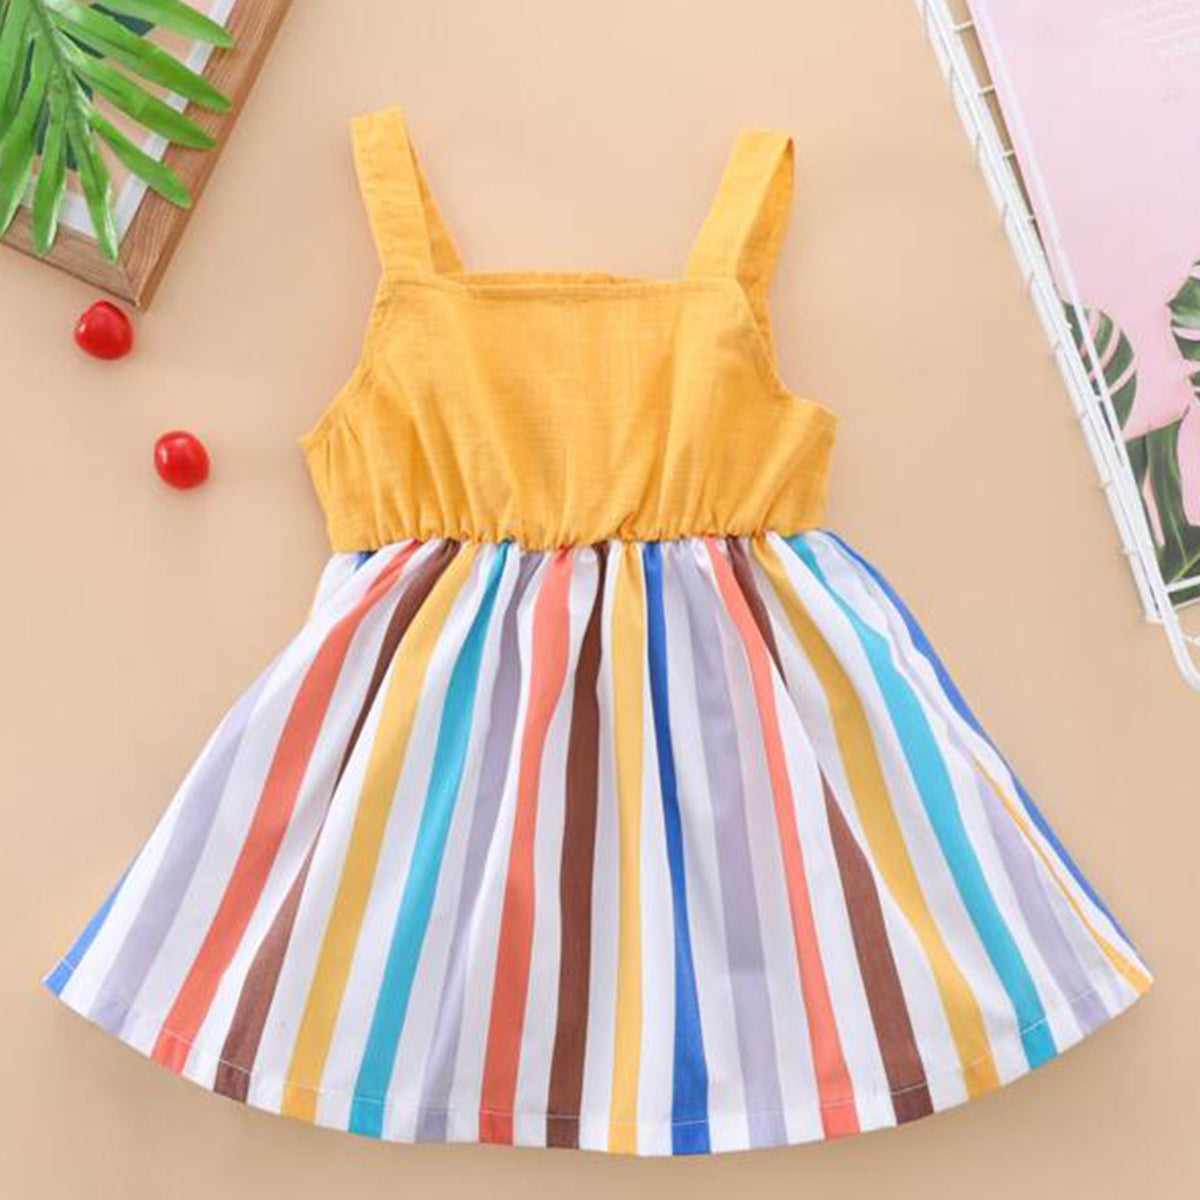 New Beautiful Fancy Baby Frock Designs 2020  Baby Girl Frock Styles 2020  Kids  Dress Designs 2020  YouTube